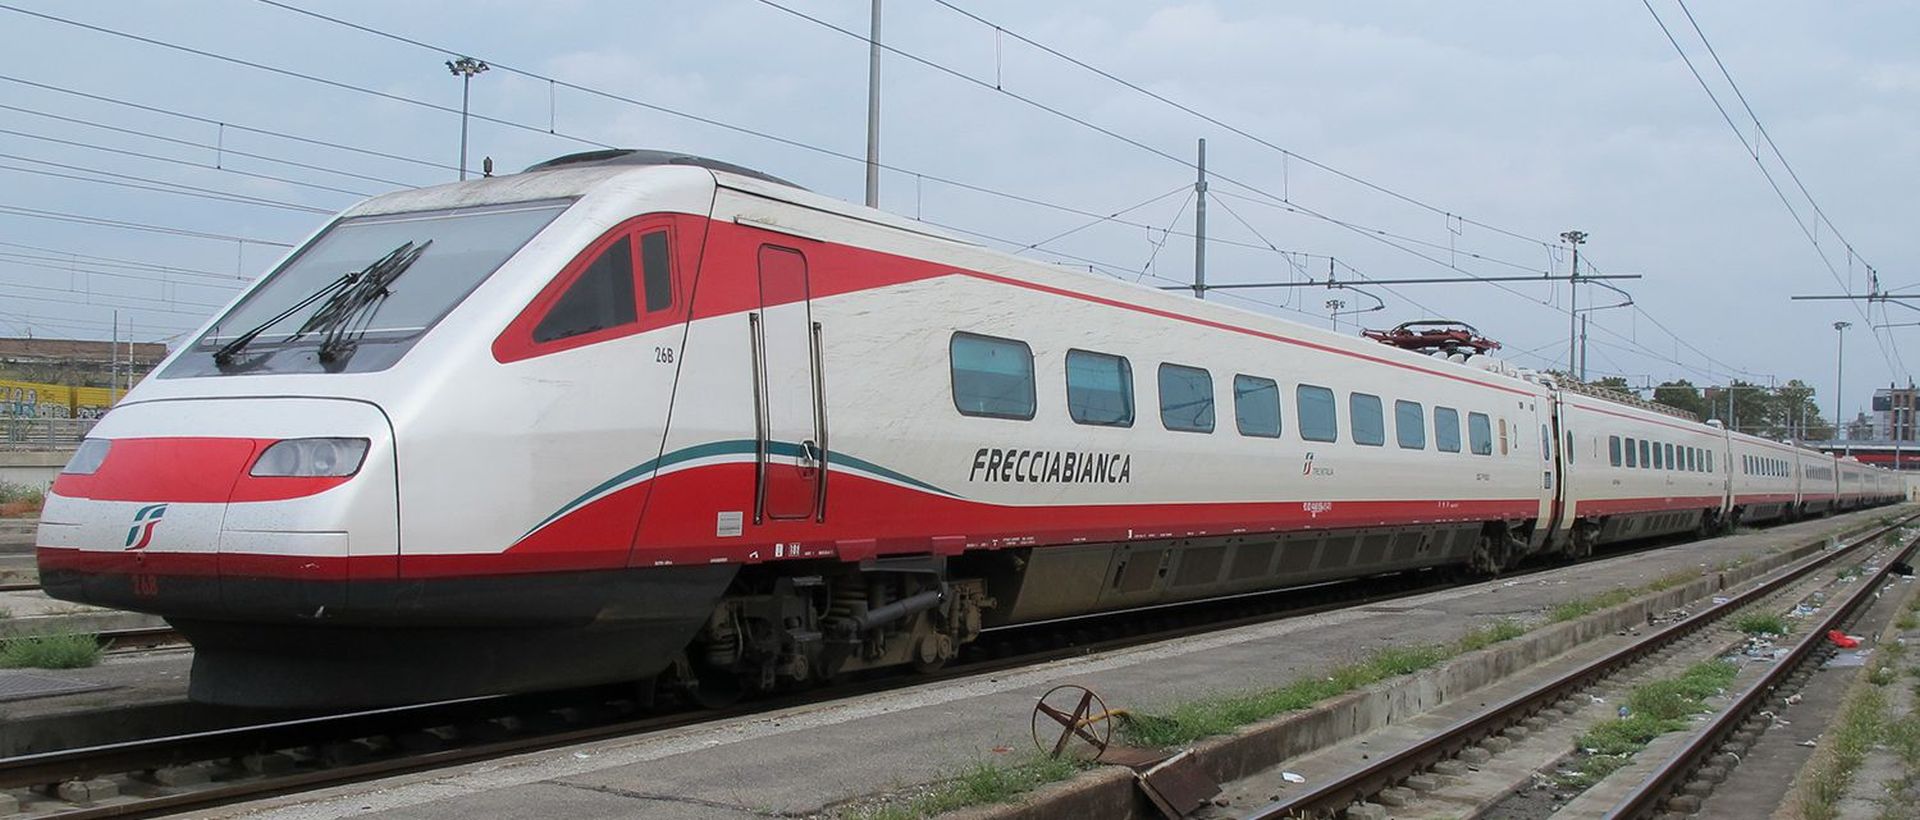 Rivarossi HR2962 - Triebzug mit Neigetechnik, 4-teilig, Reihe ETR 460 Frecciabianca, FS, Ep.VI